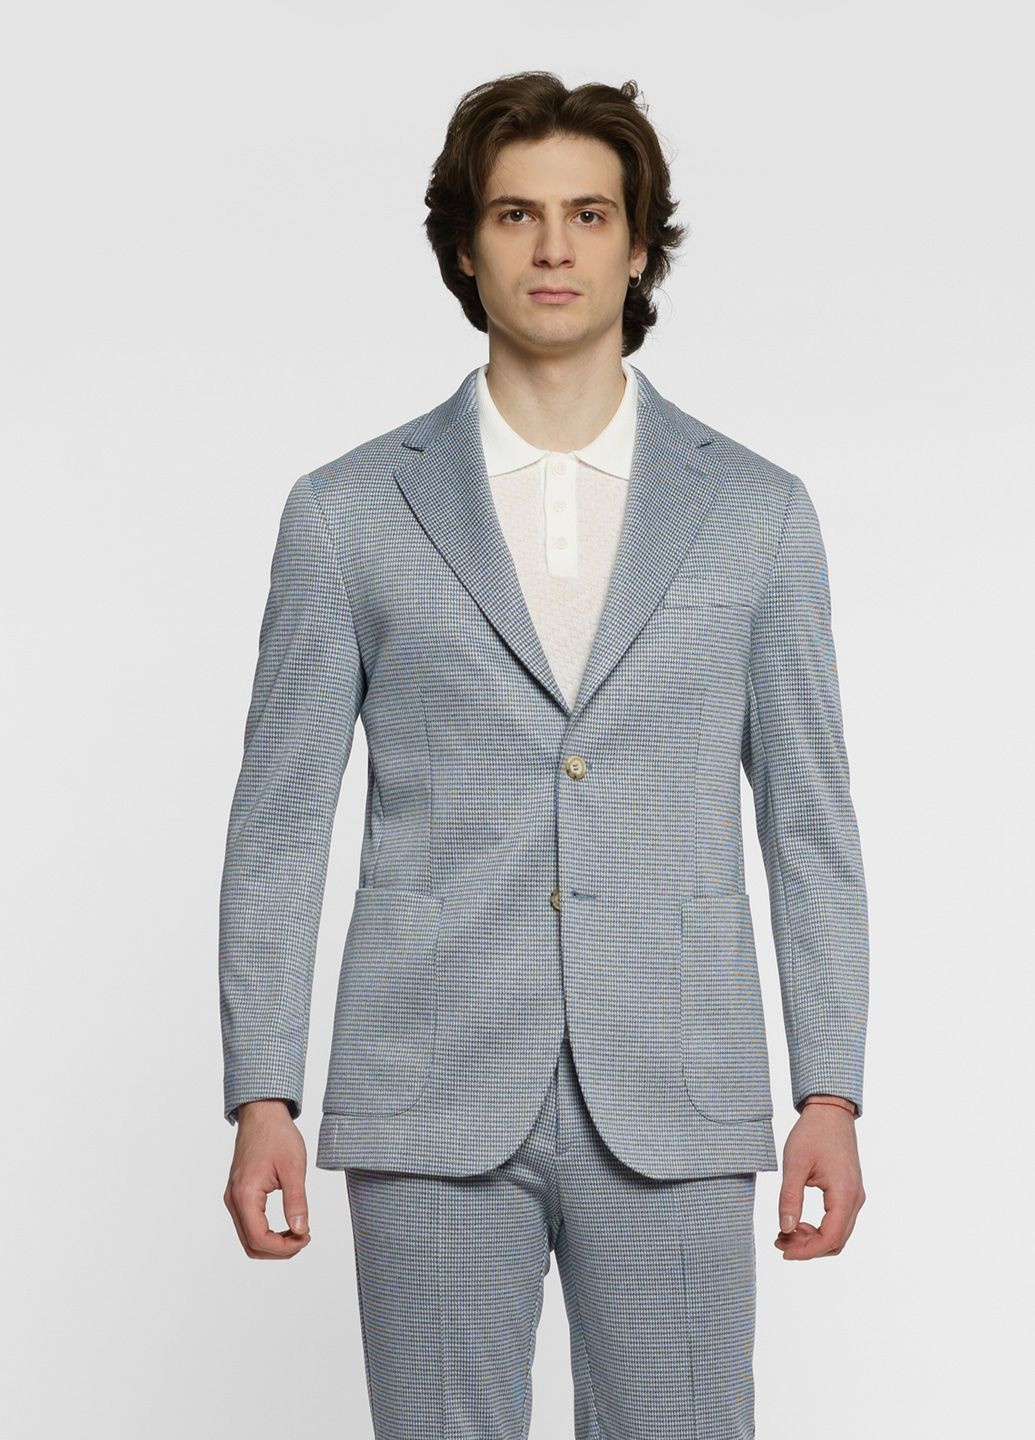 Пиджак мужской серый Arber napoli jersey (291064309)